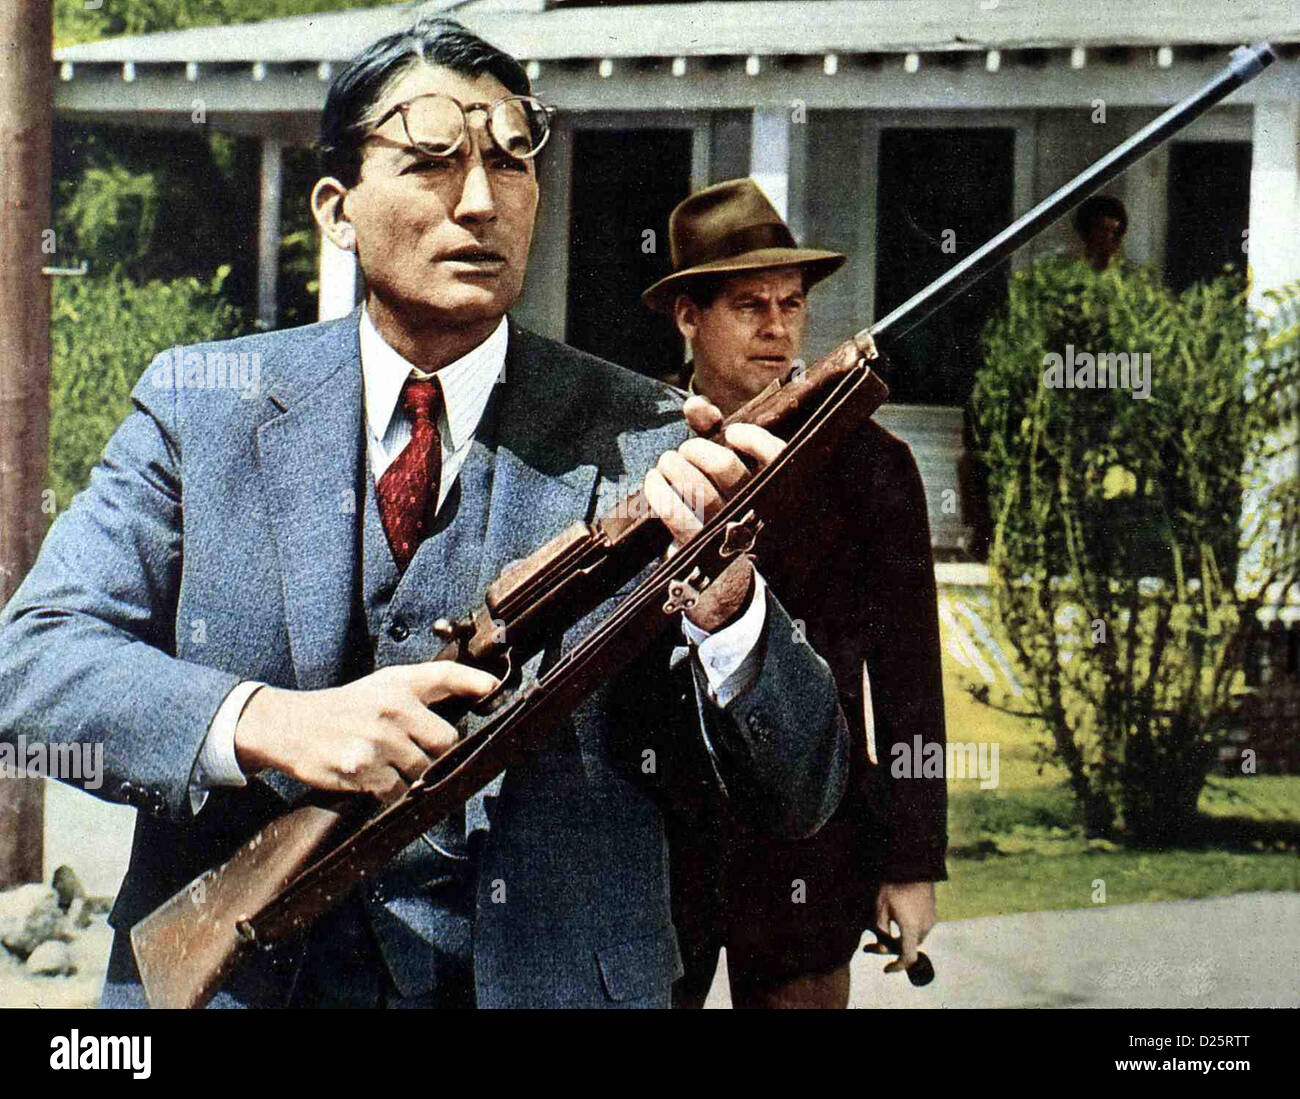 Wer Die Nachtigall Stoert  To Kill Mockingbird  Gregory Peck Als Rechtsanwalt Atticus Finch (Gregory Peck,l) den Farbigen Tom Stock Photo